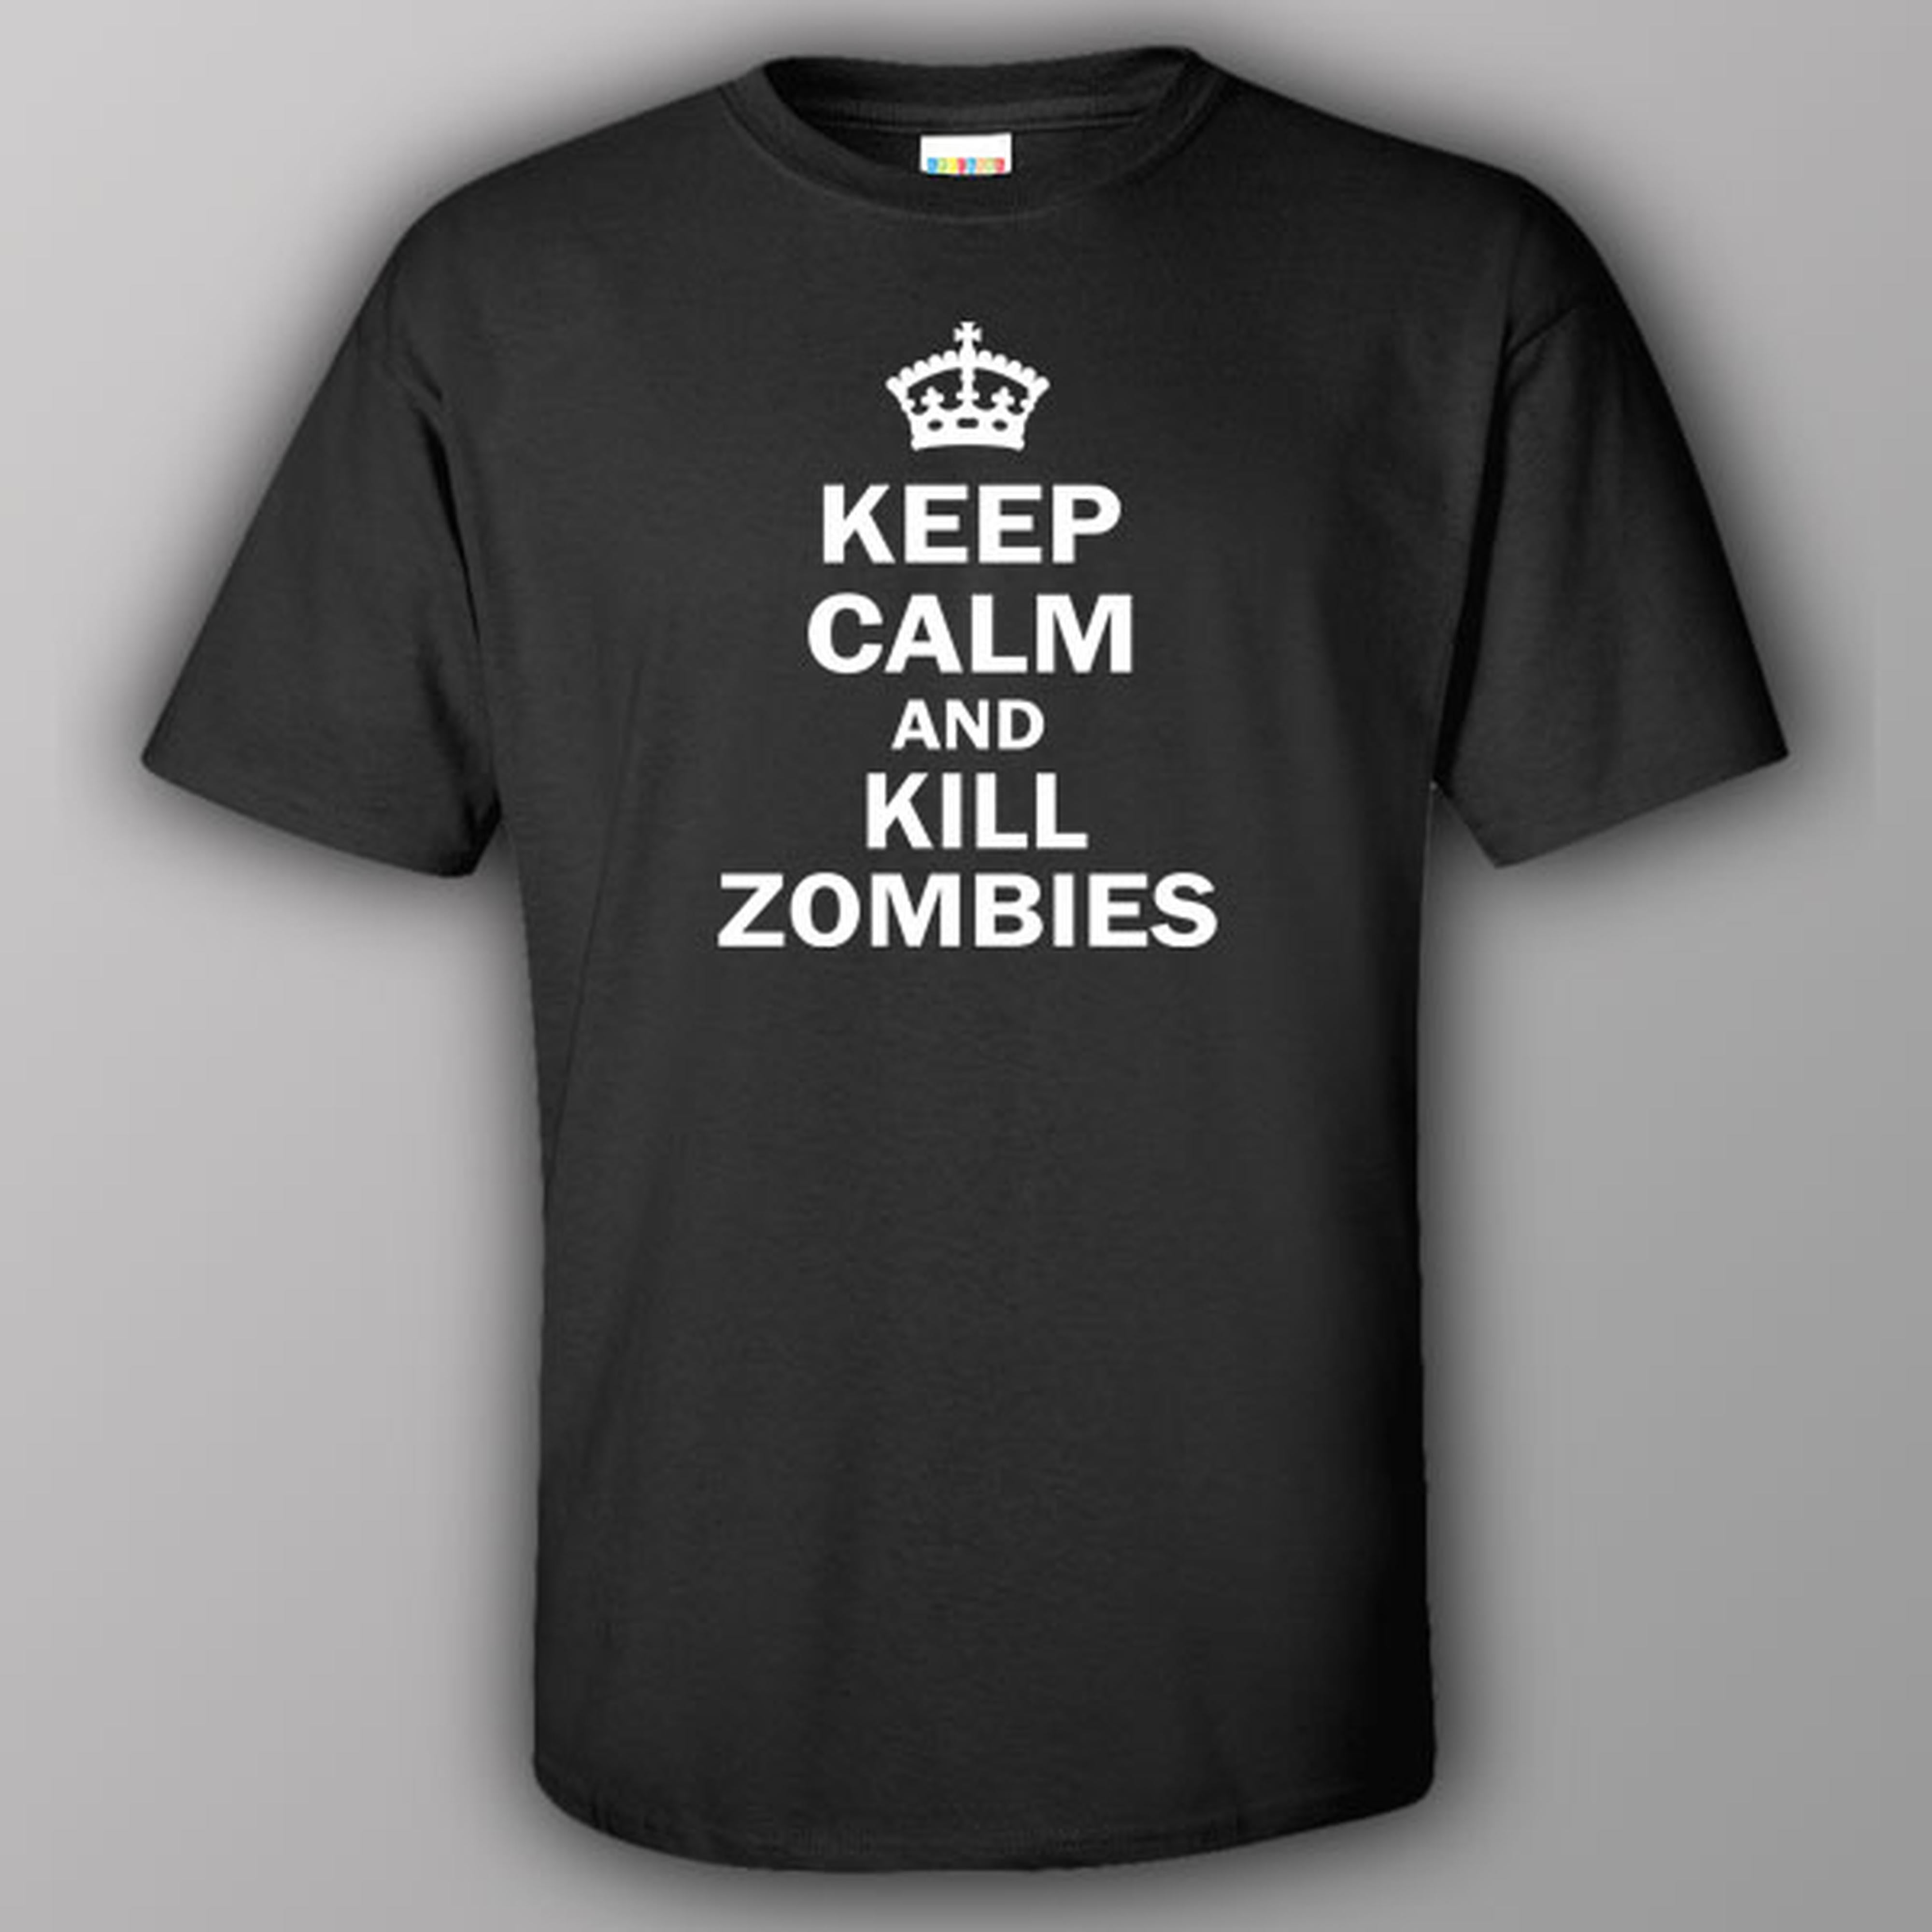 Keep calm and kill zombies - T-shirt